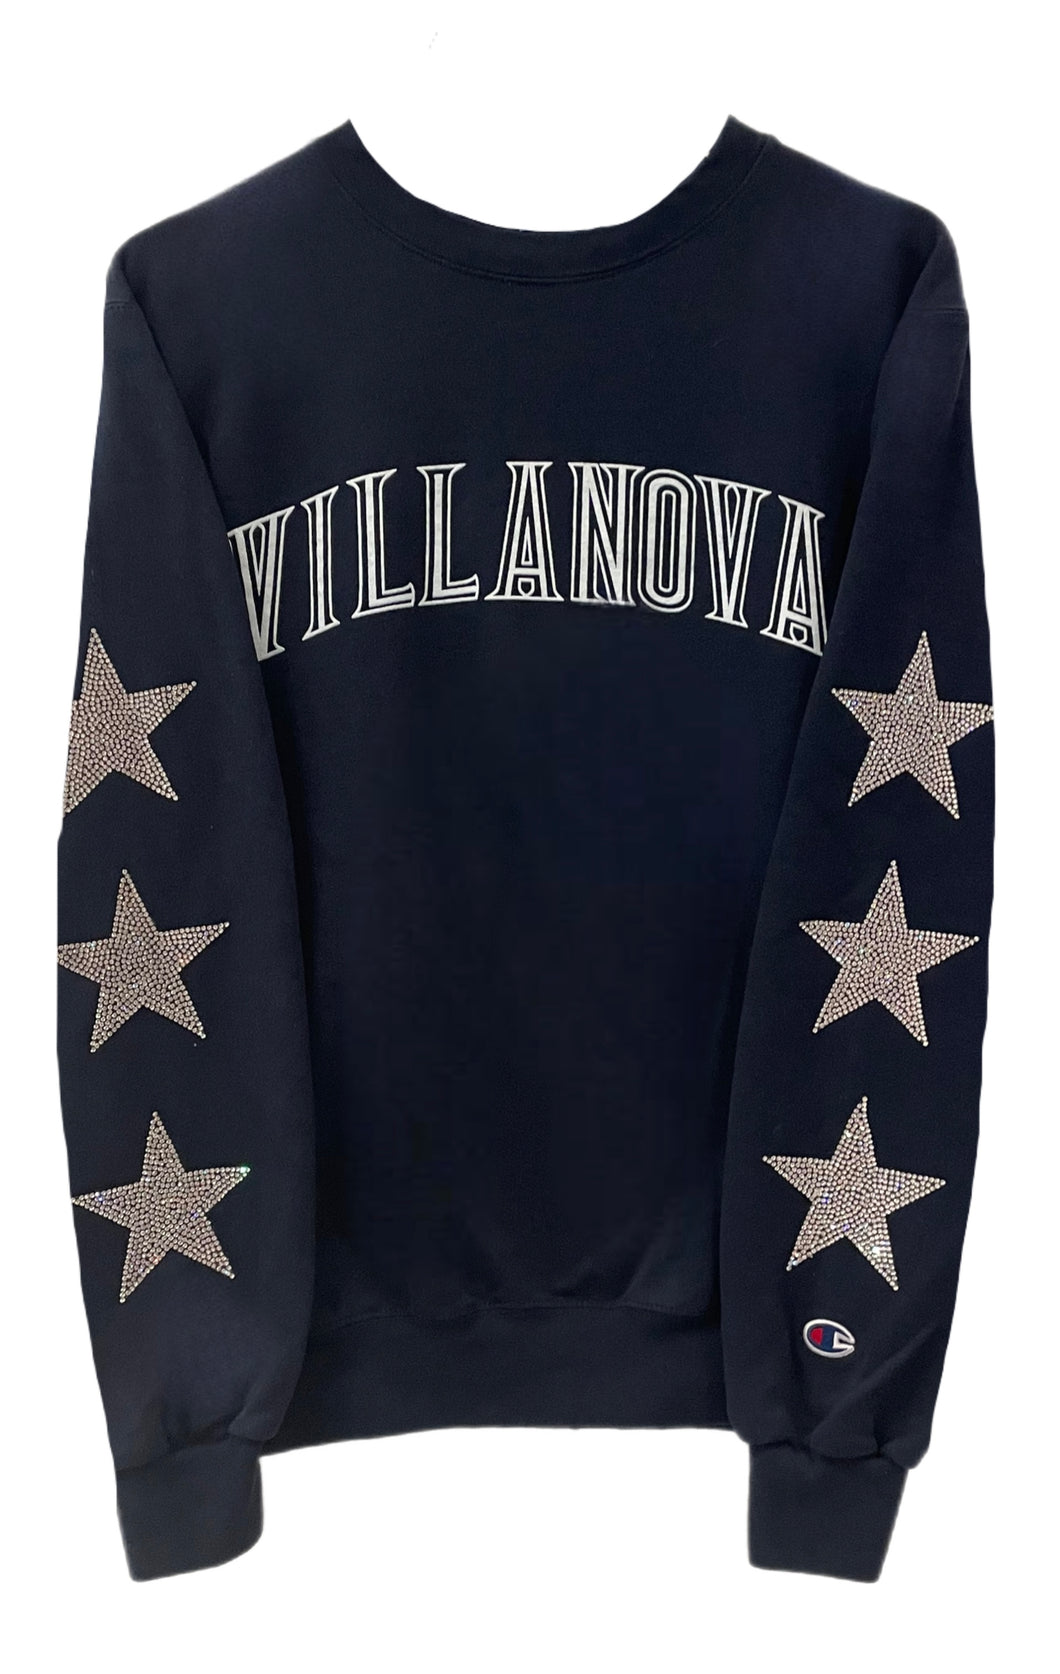 Villanova University, One of a KIND Vintage Sweatshirt with Three Crystals Star Design